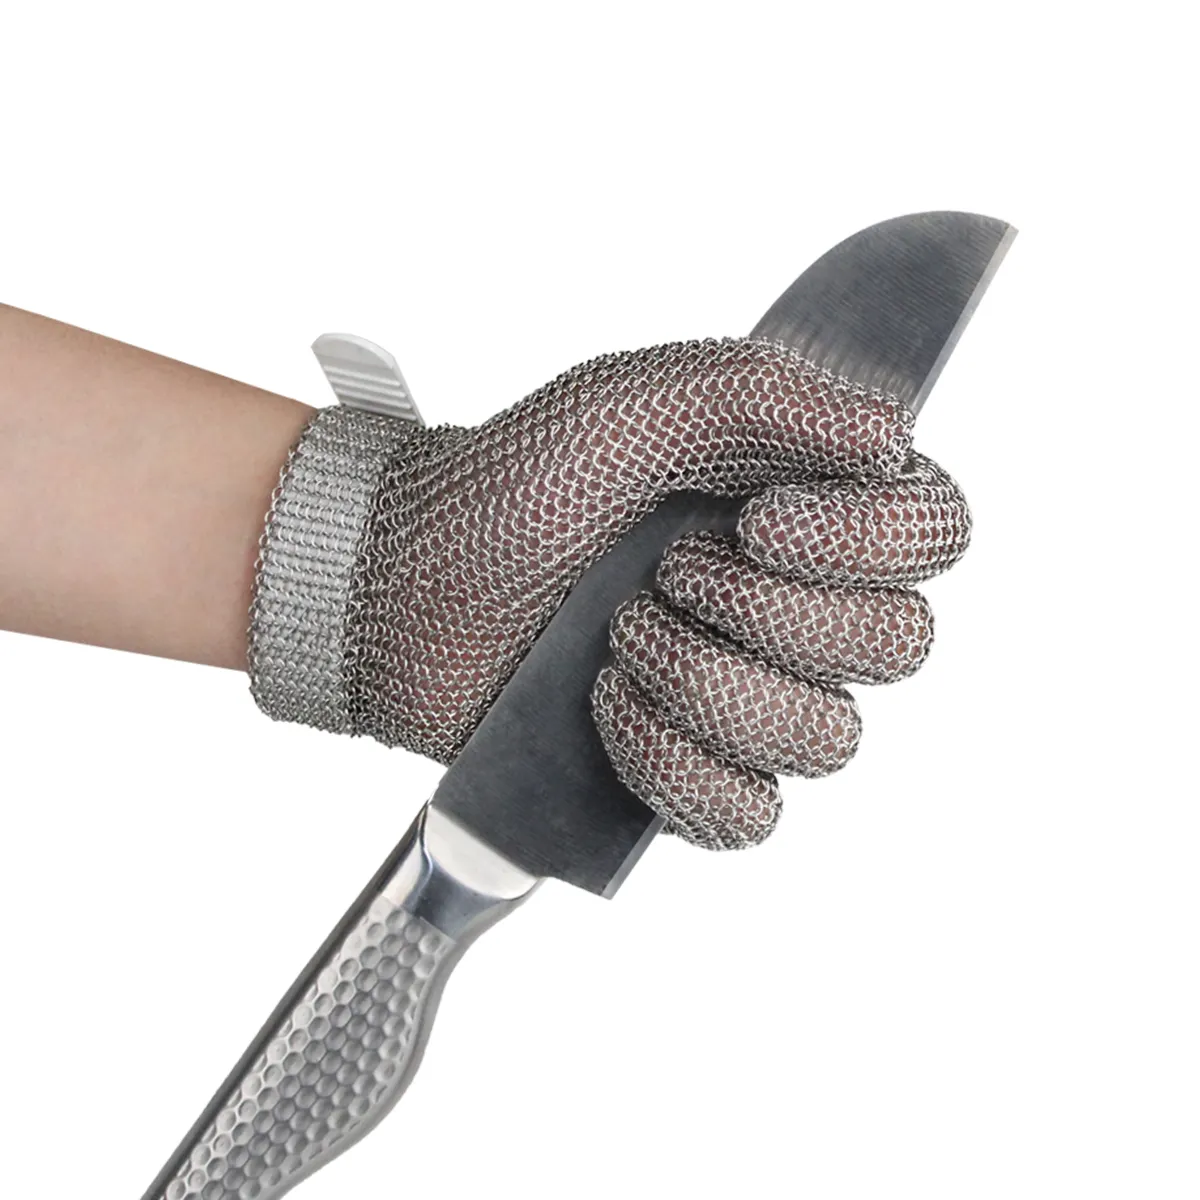 Guanti industriali di sicurezza a maglia in acciaio guanti resistenti al taglio per lavori di saldatura